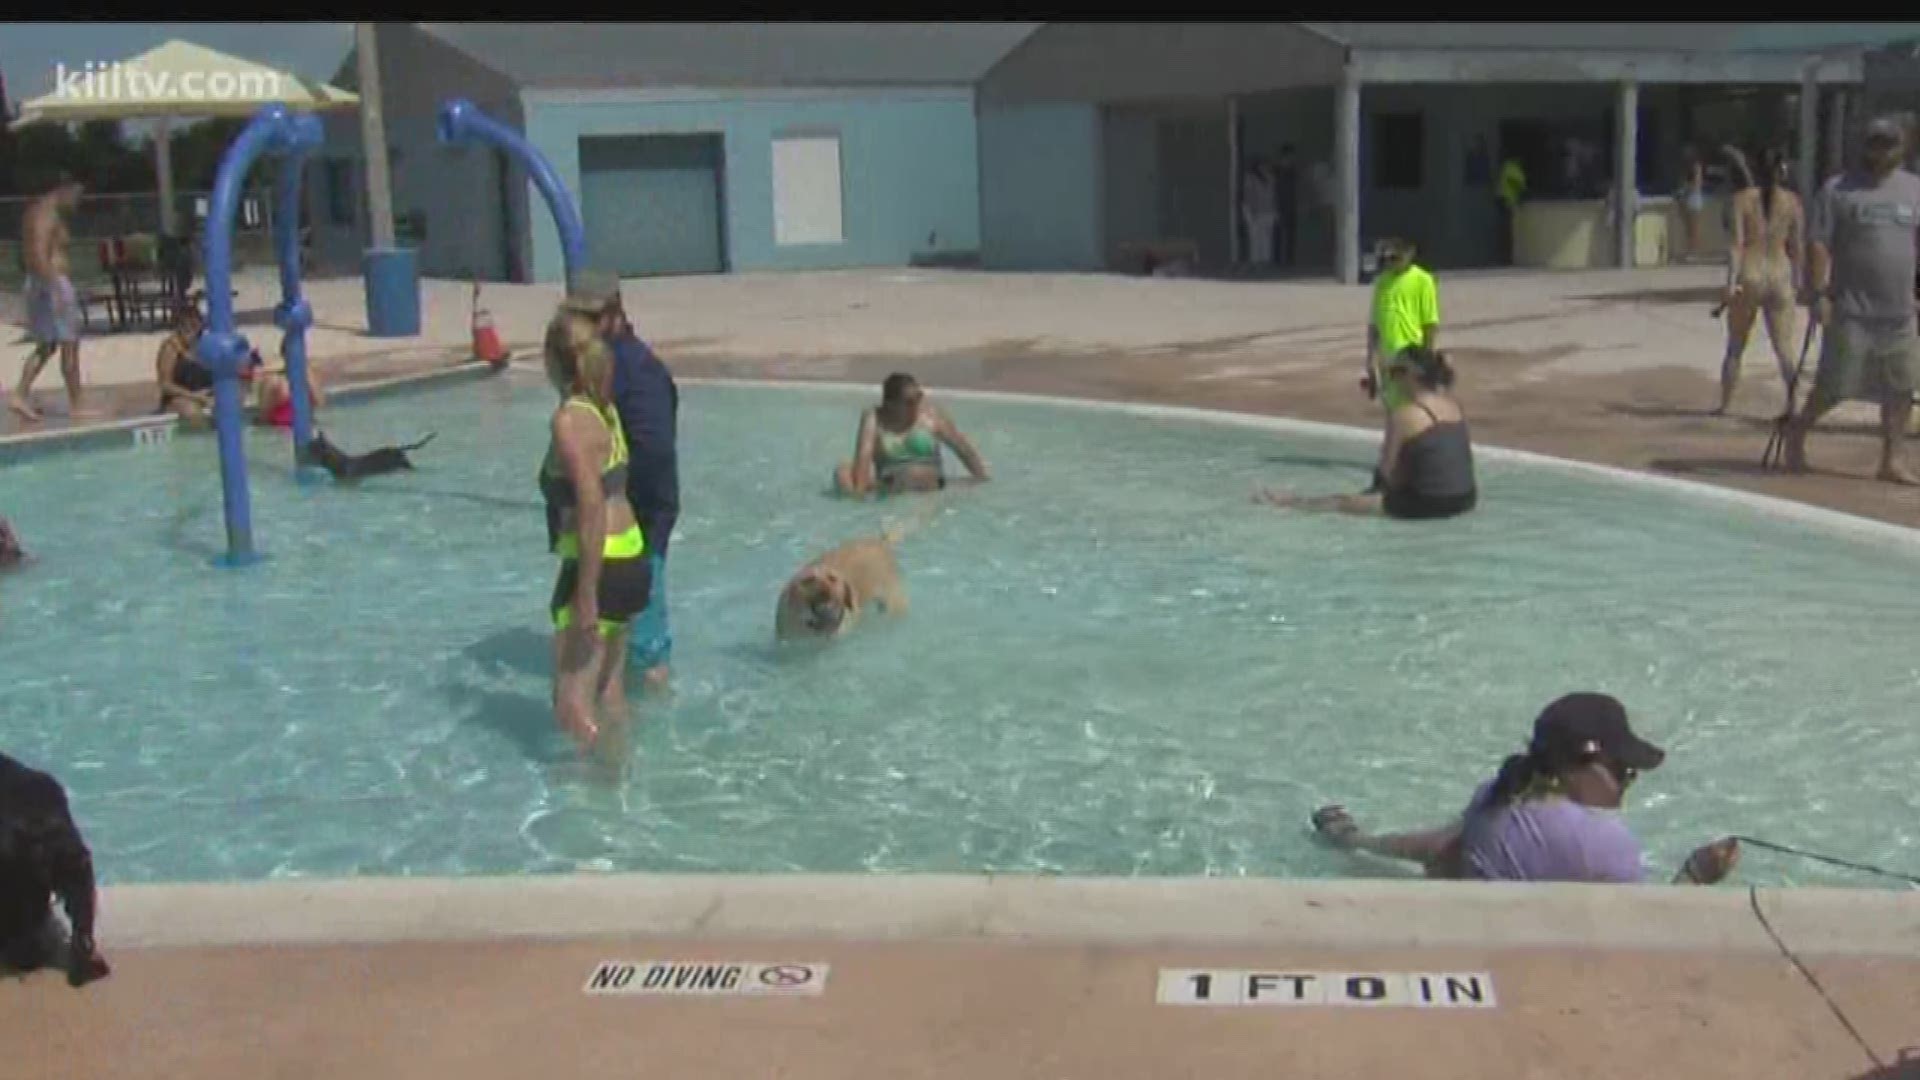 H-E-B pool hosts annual Doggy Dip